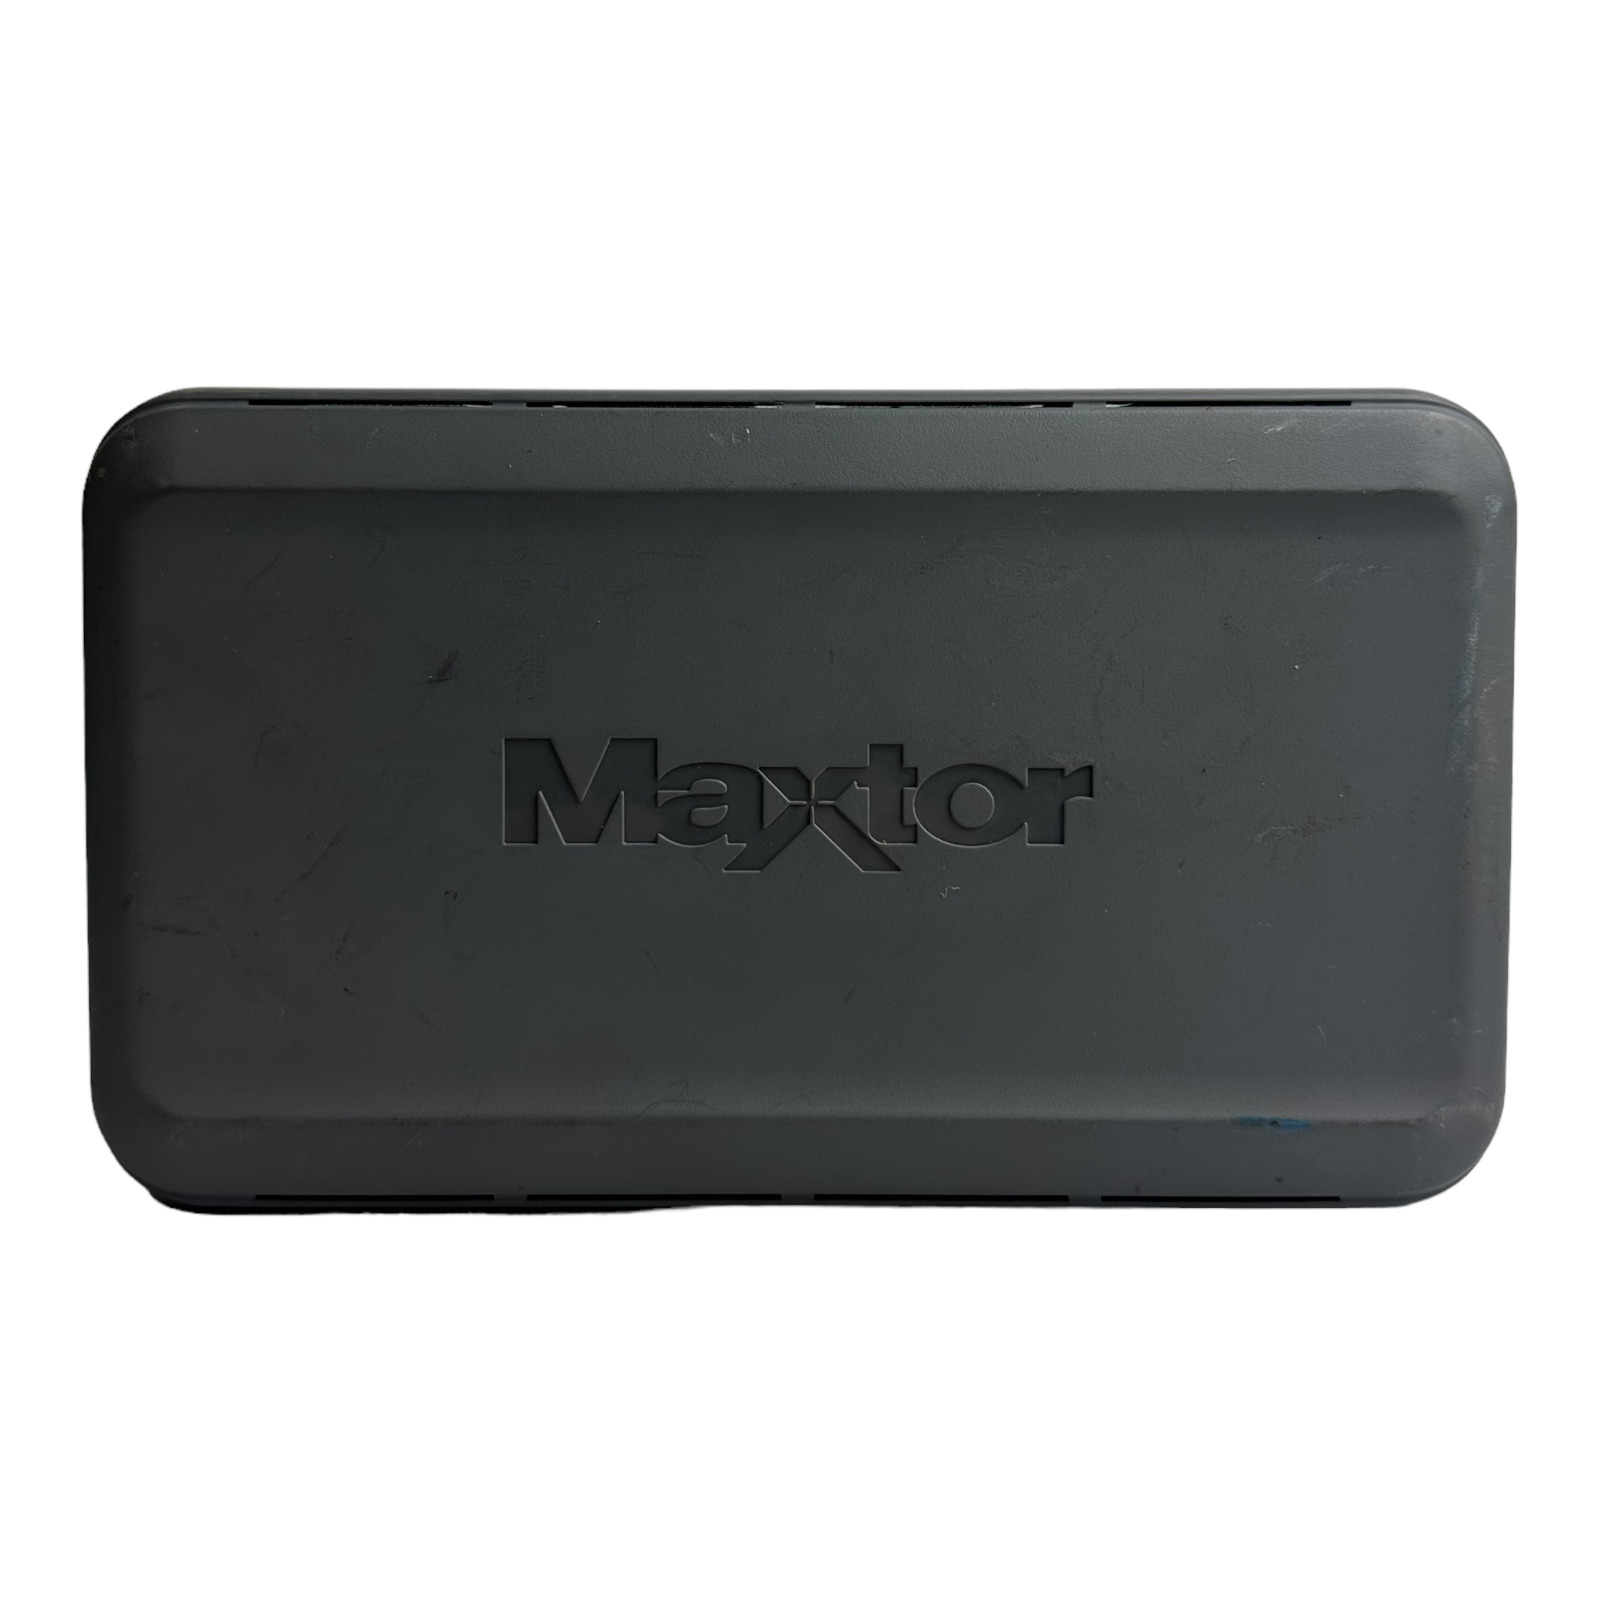 Maxtor Personal Storage 3200 Gray 100 GB Portable HDD External Hard Drive